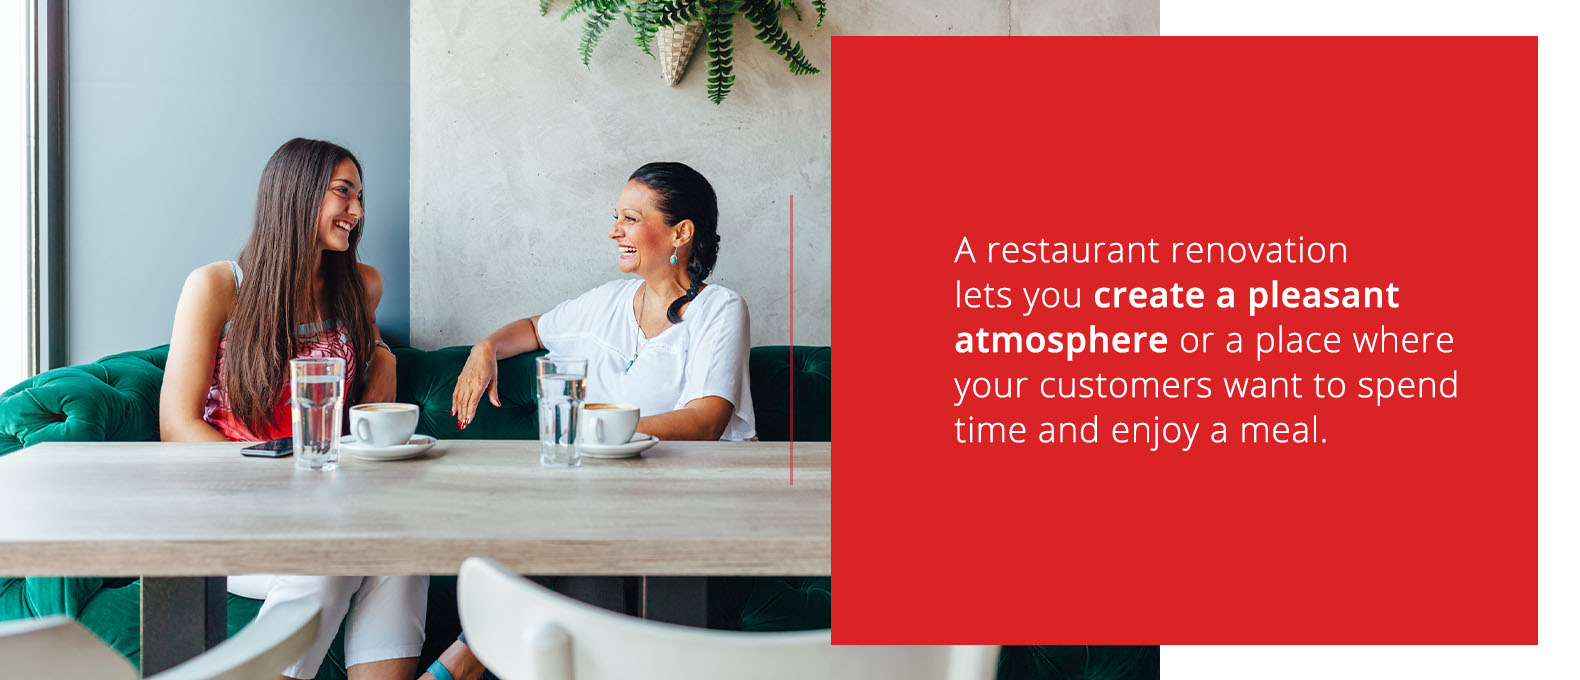 A restaurant renovation lets you create a pleasant atomosphere